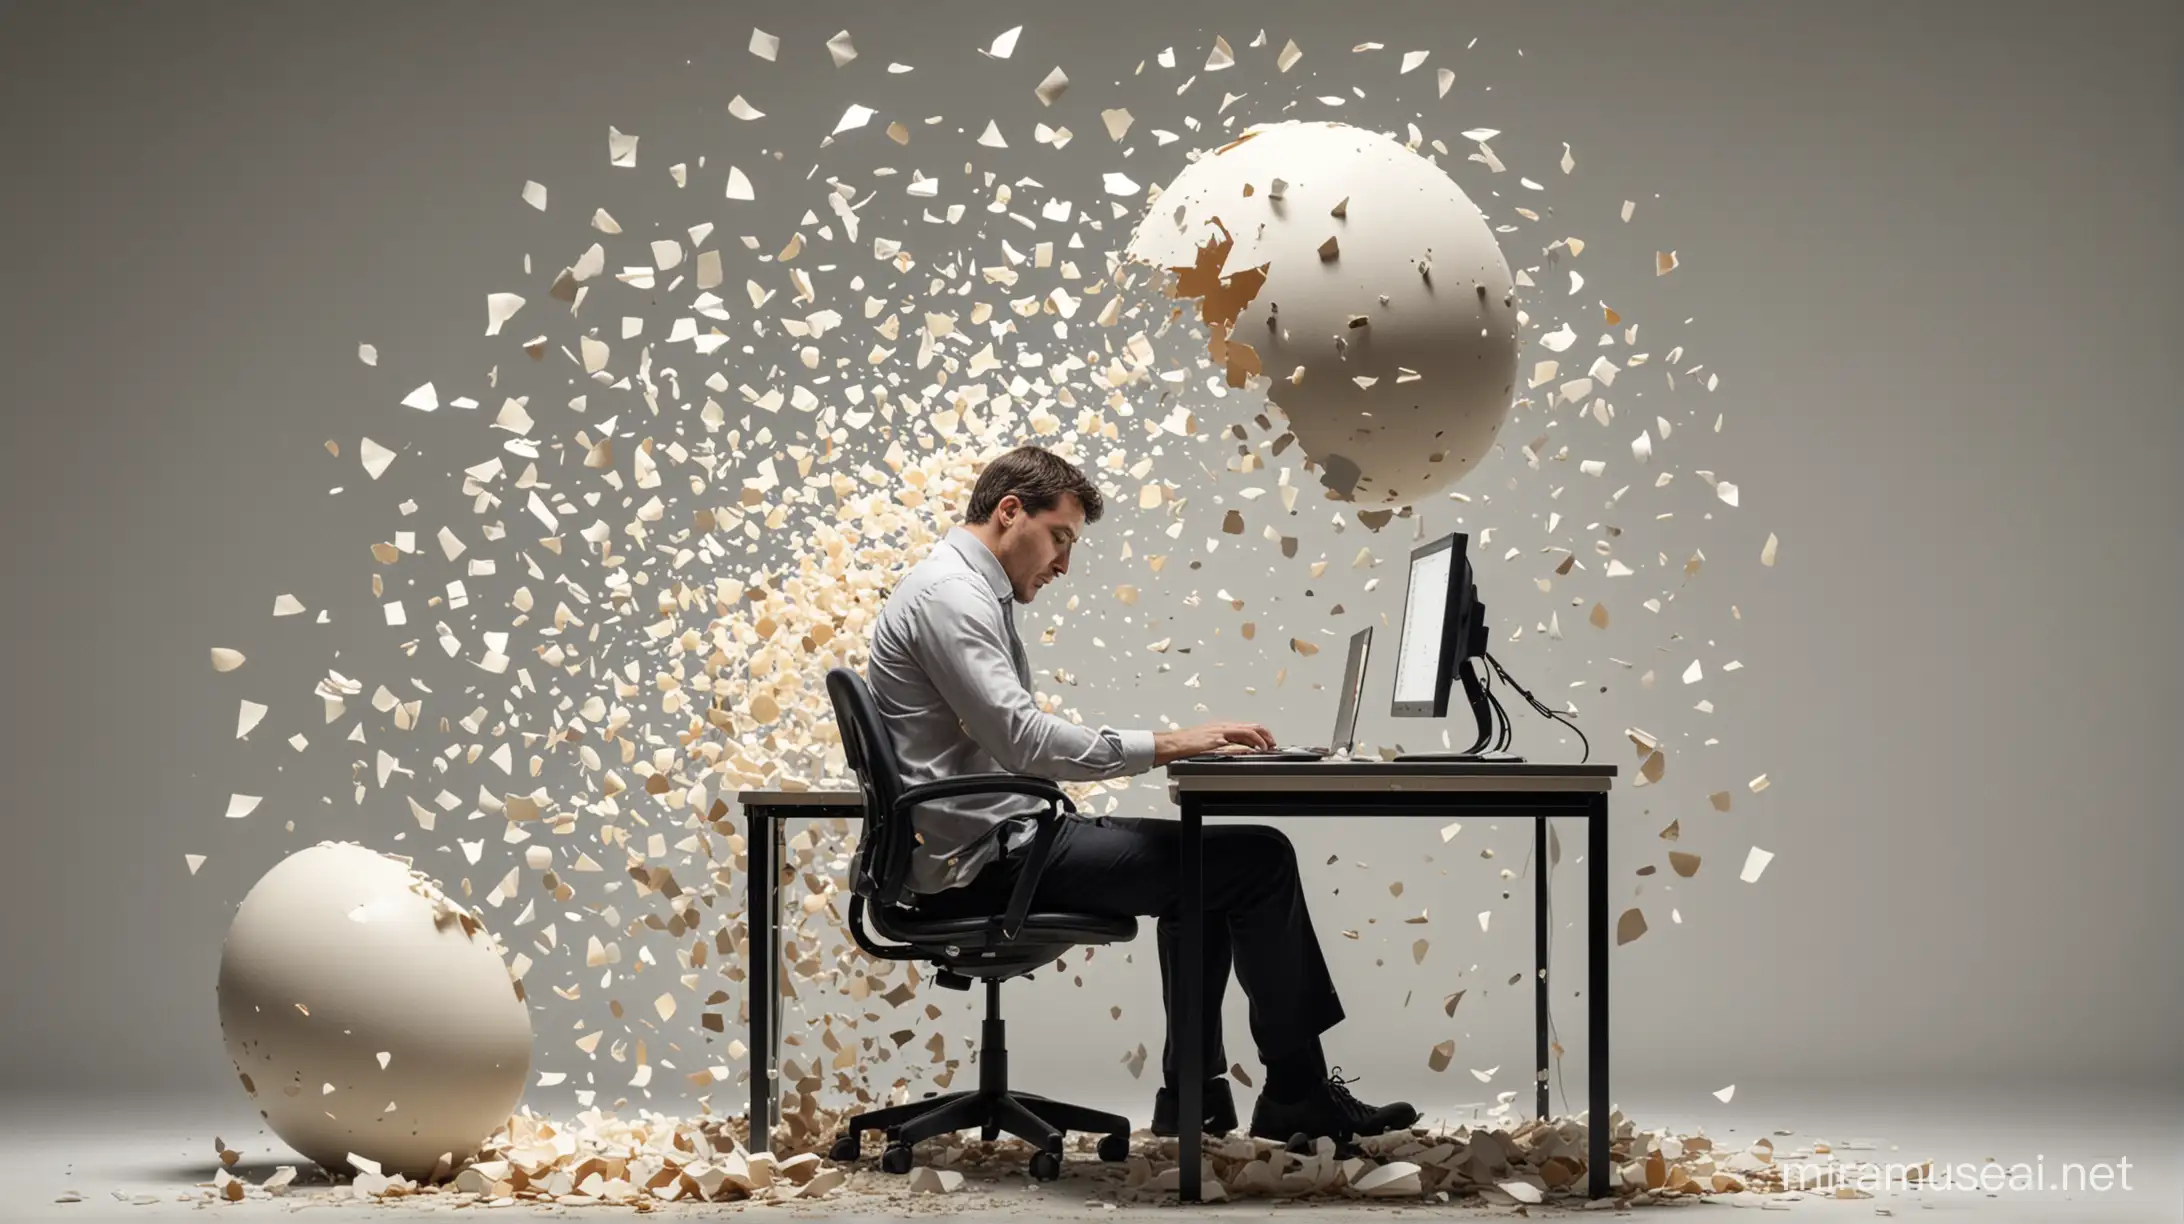 Man Working at Computer Transforms into Eggshell Conceptual Digital Art